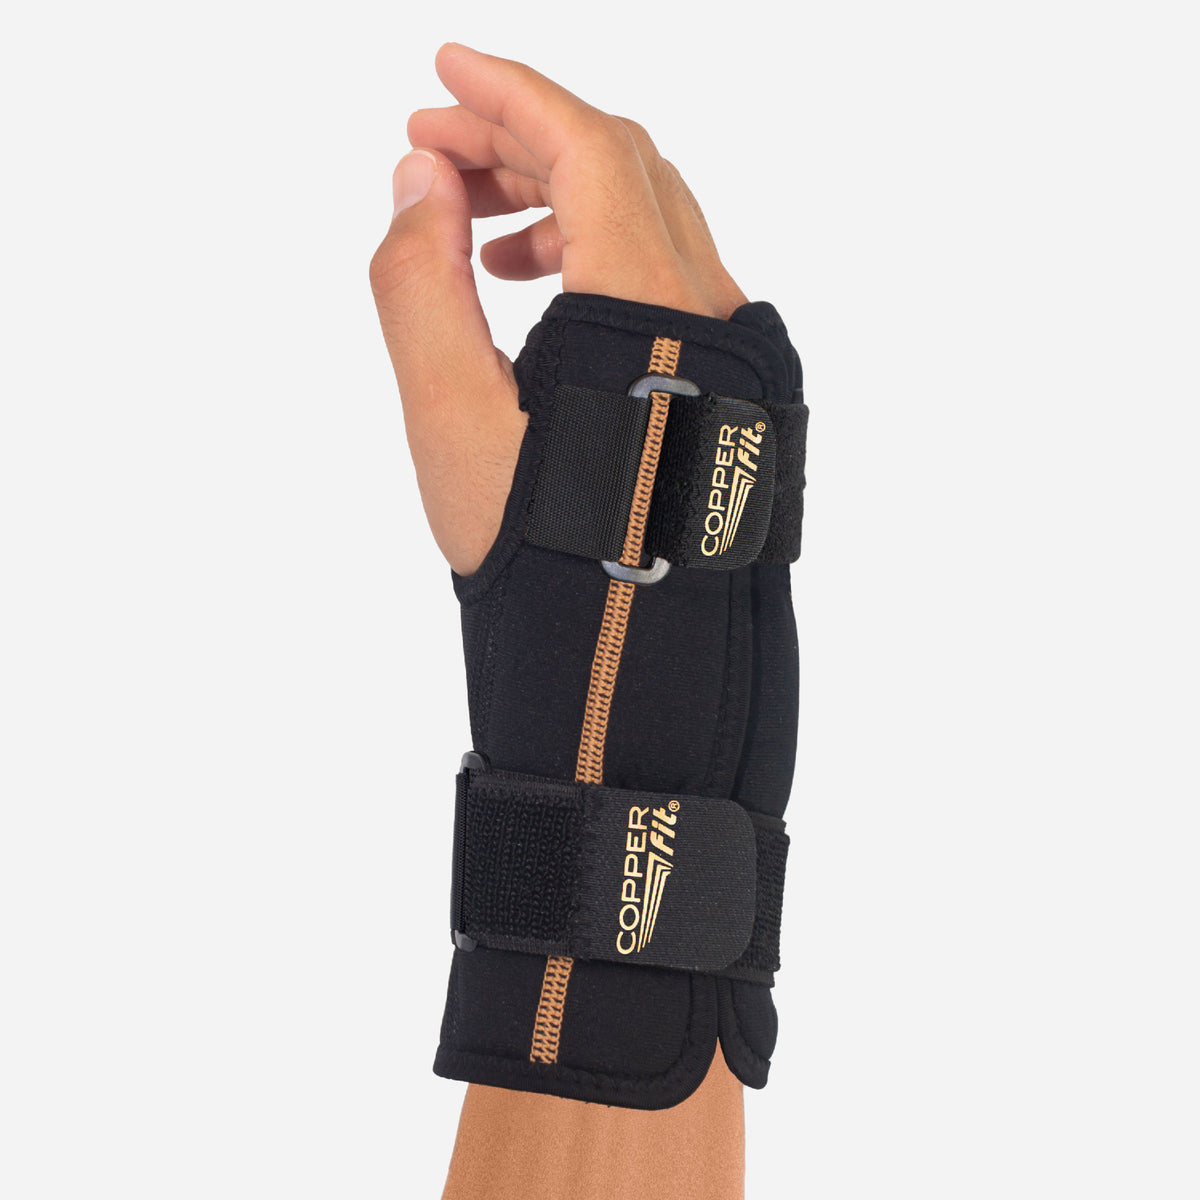 Copper Wrist Brace Sports Wrap Adjustable Support Strap Carpal